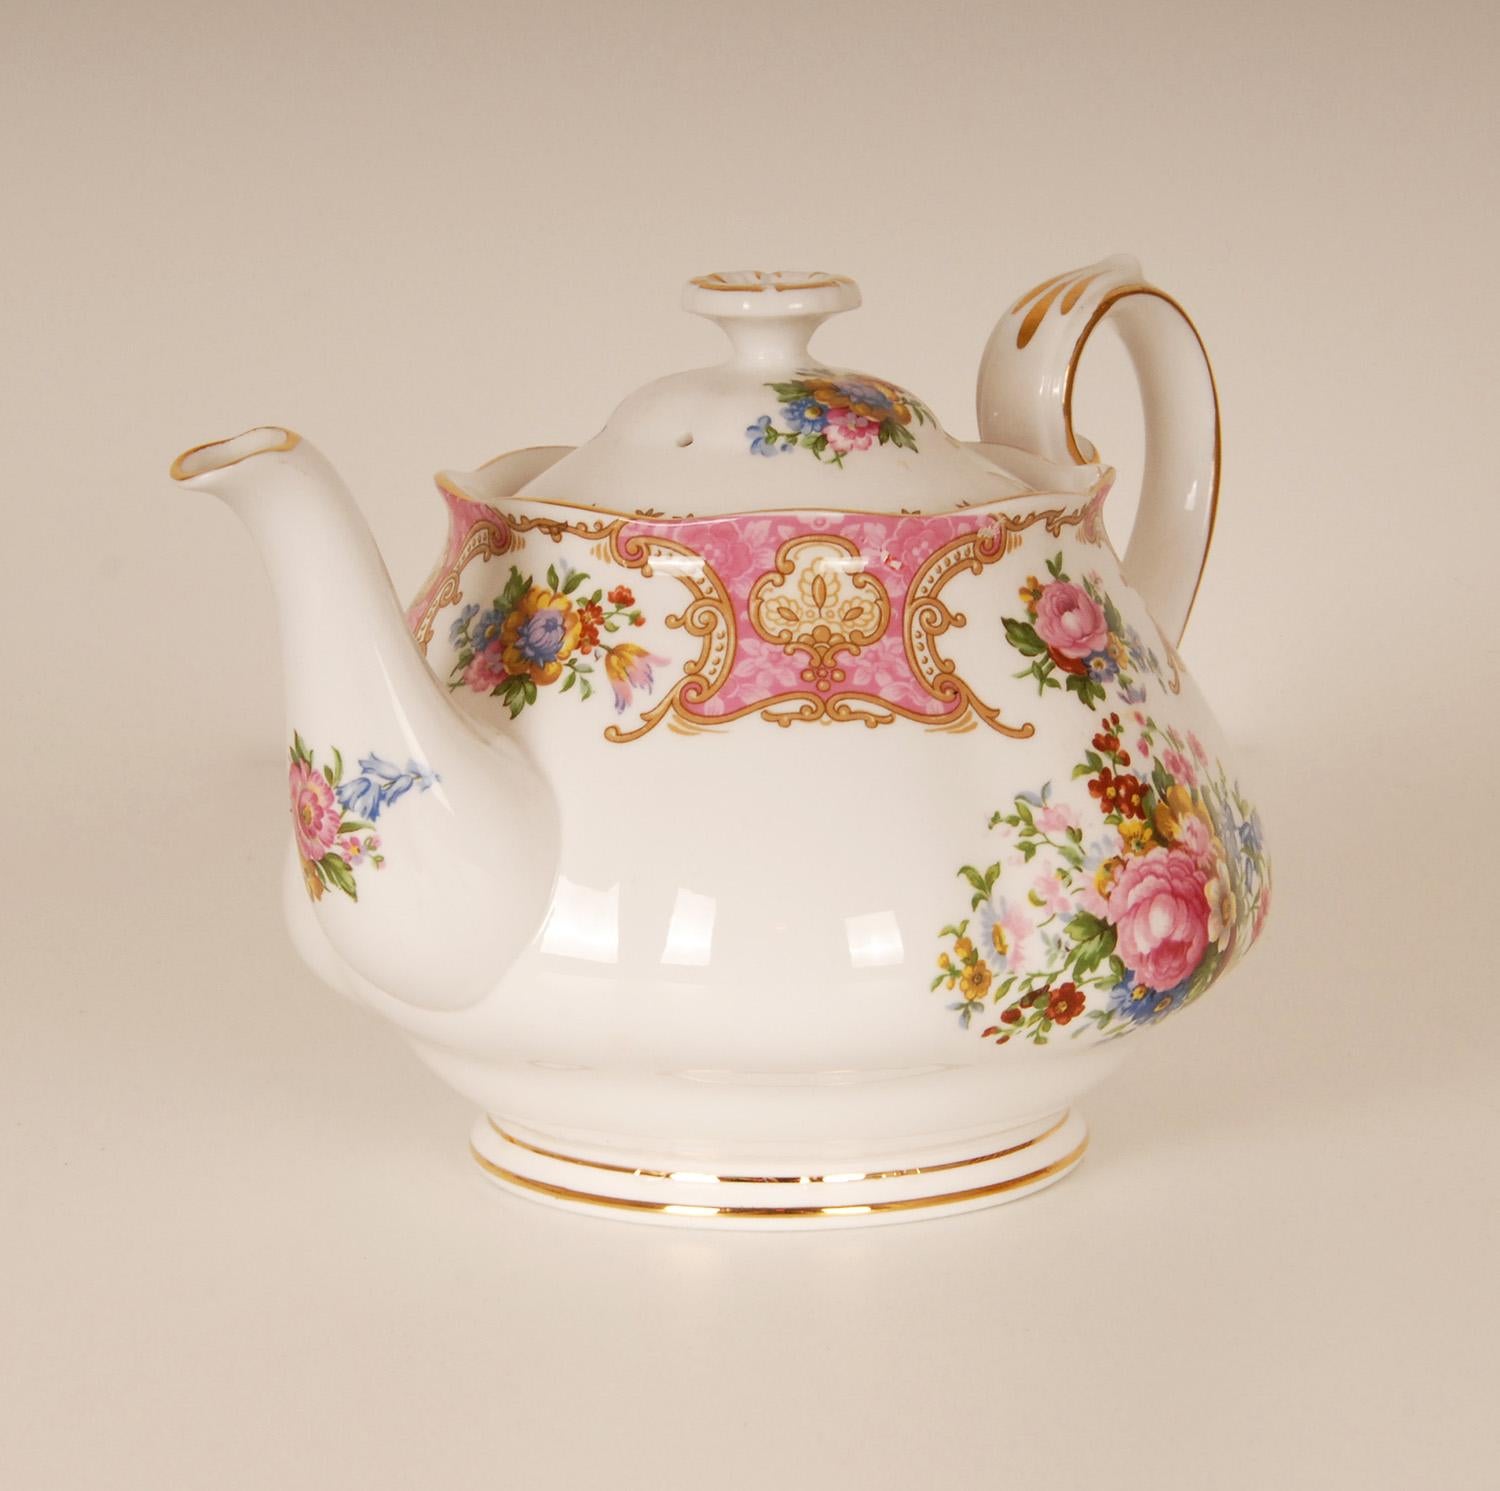 Vintage Royal Albert Bone China Tea Set and Plates Lady Carlyle Pattern 14 Pcs 1